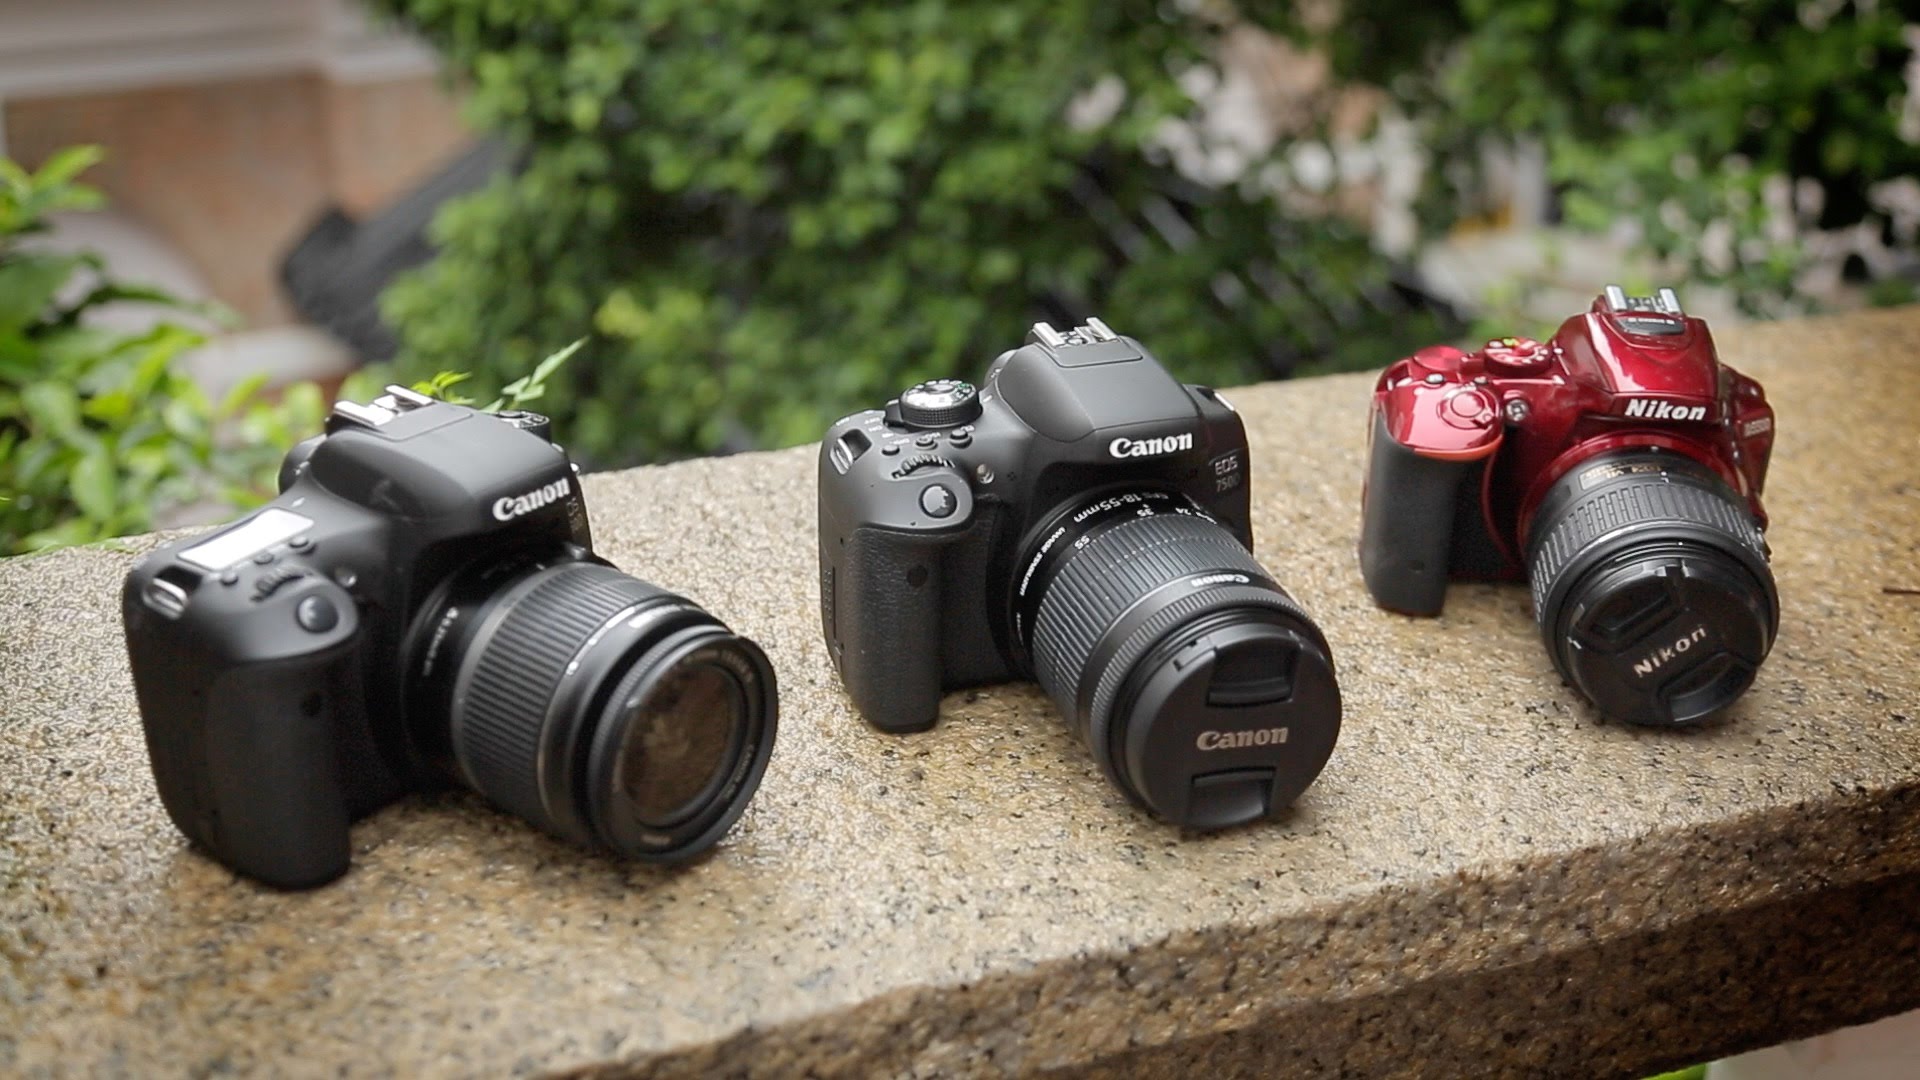 Canon 750/760D vs Nikon D5500 Head-to-Head (T6i/T6s)